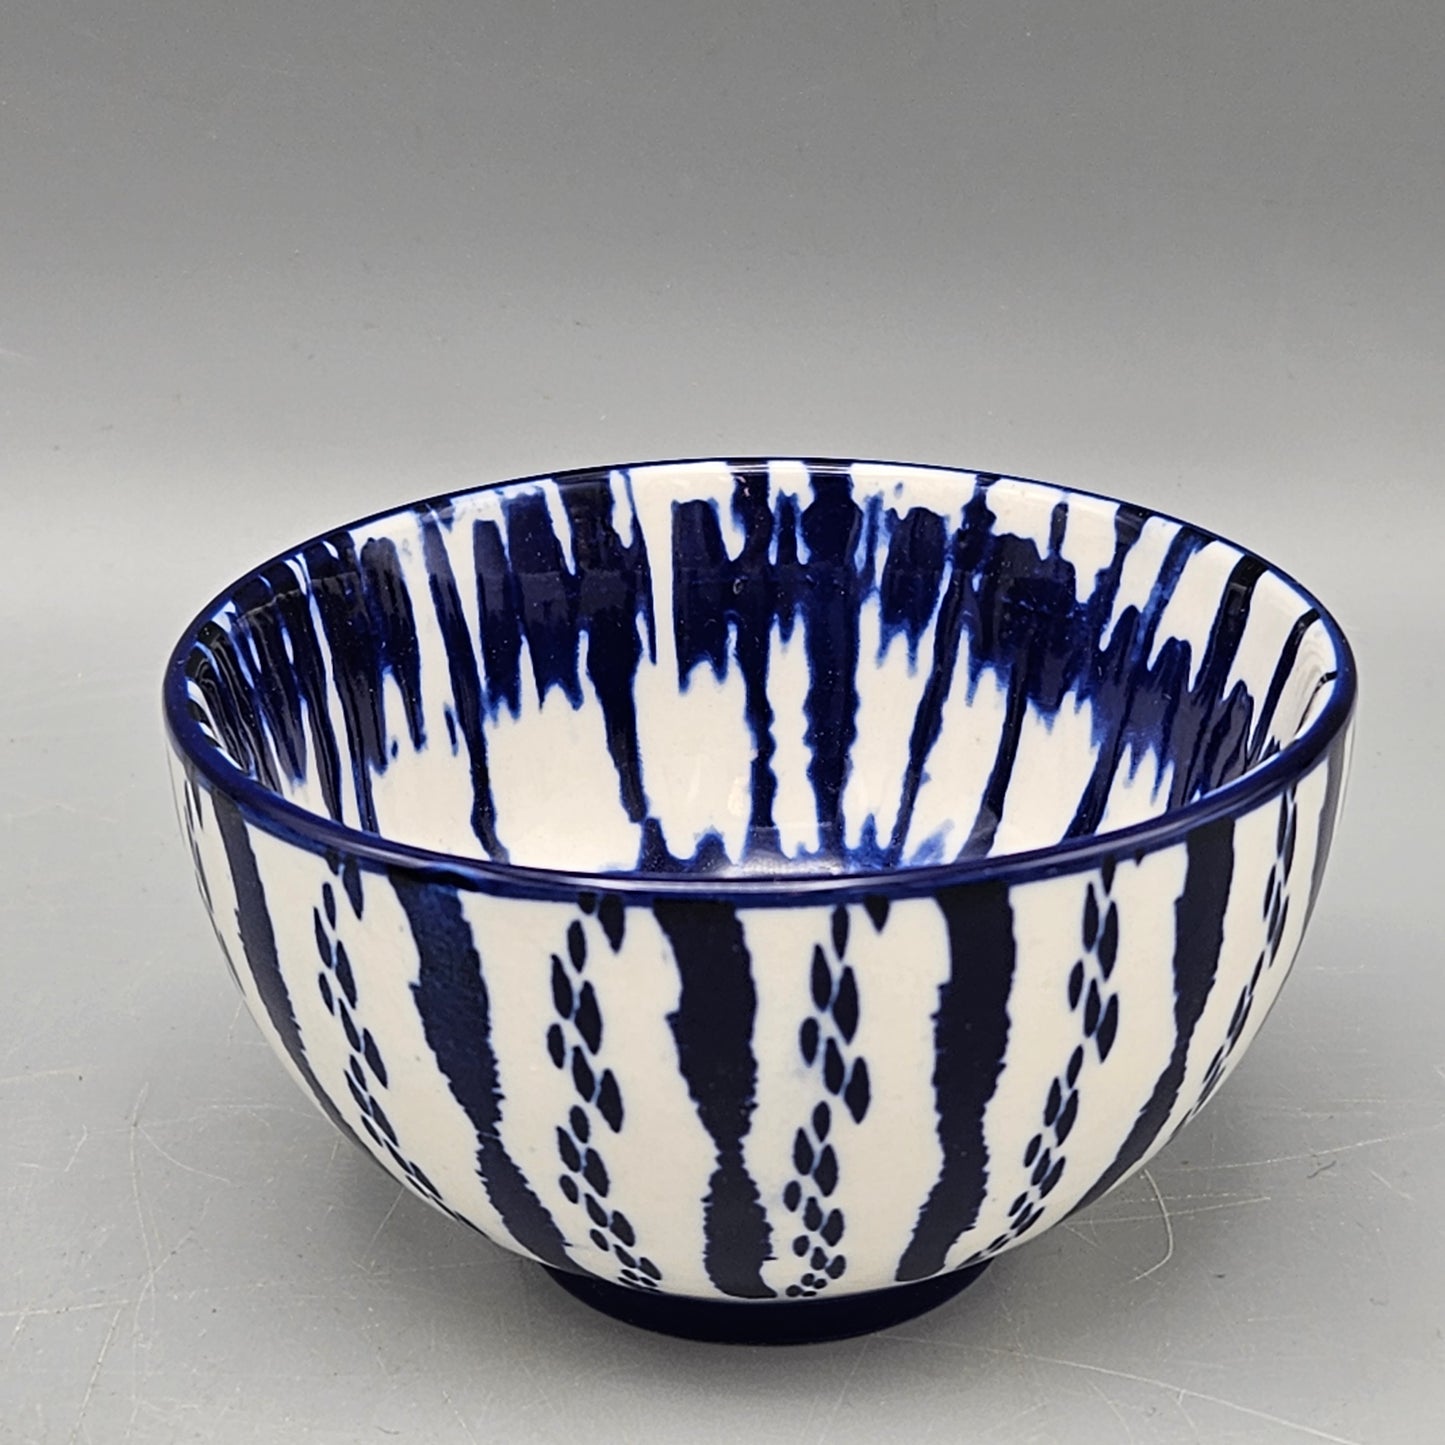 West Elm Blue and White Ceramic Bowls - Set of Three